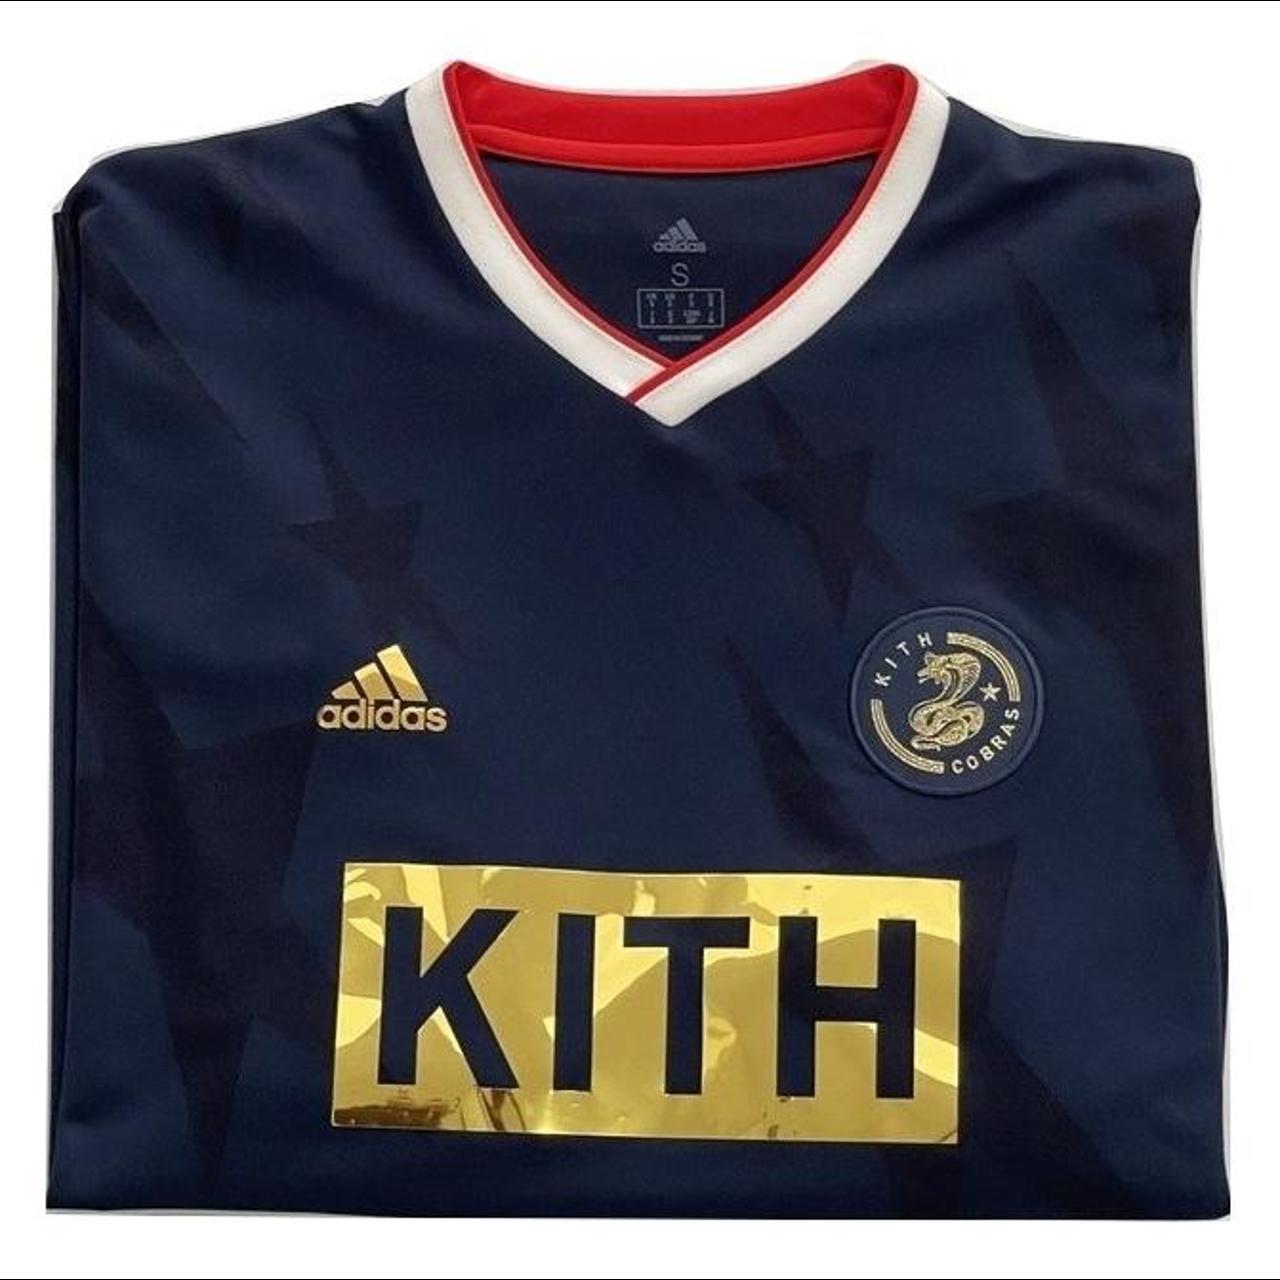 KITH x Adidas Soccer jersey Kith cobras Size:... - Depop